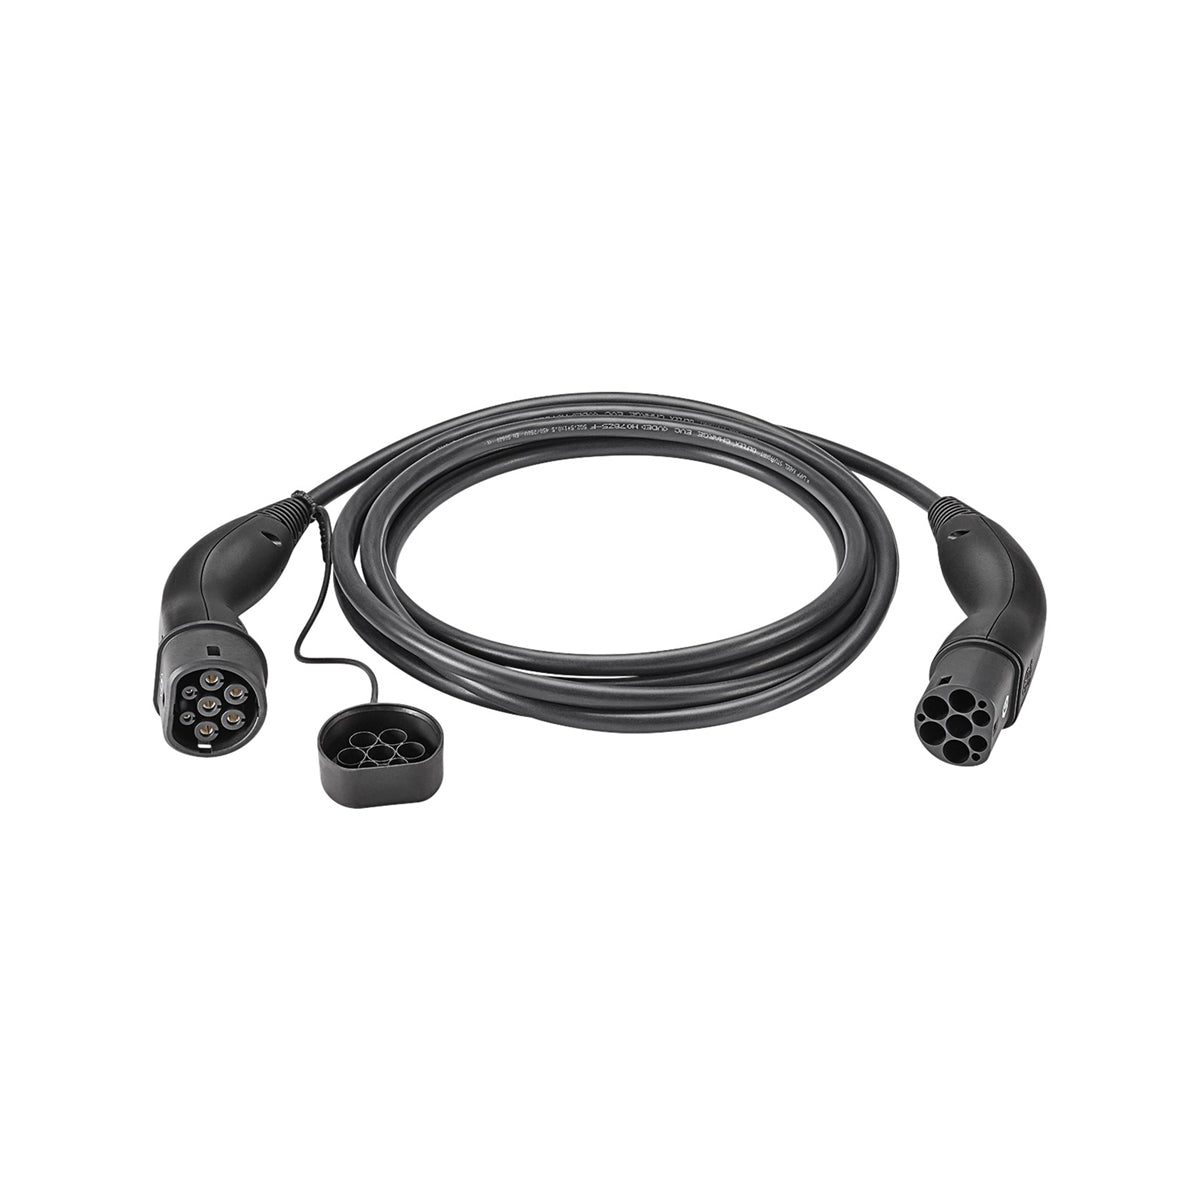 LAPP EV Charge Cable Type 2 (11kW-3P-20A) 5m - Black.